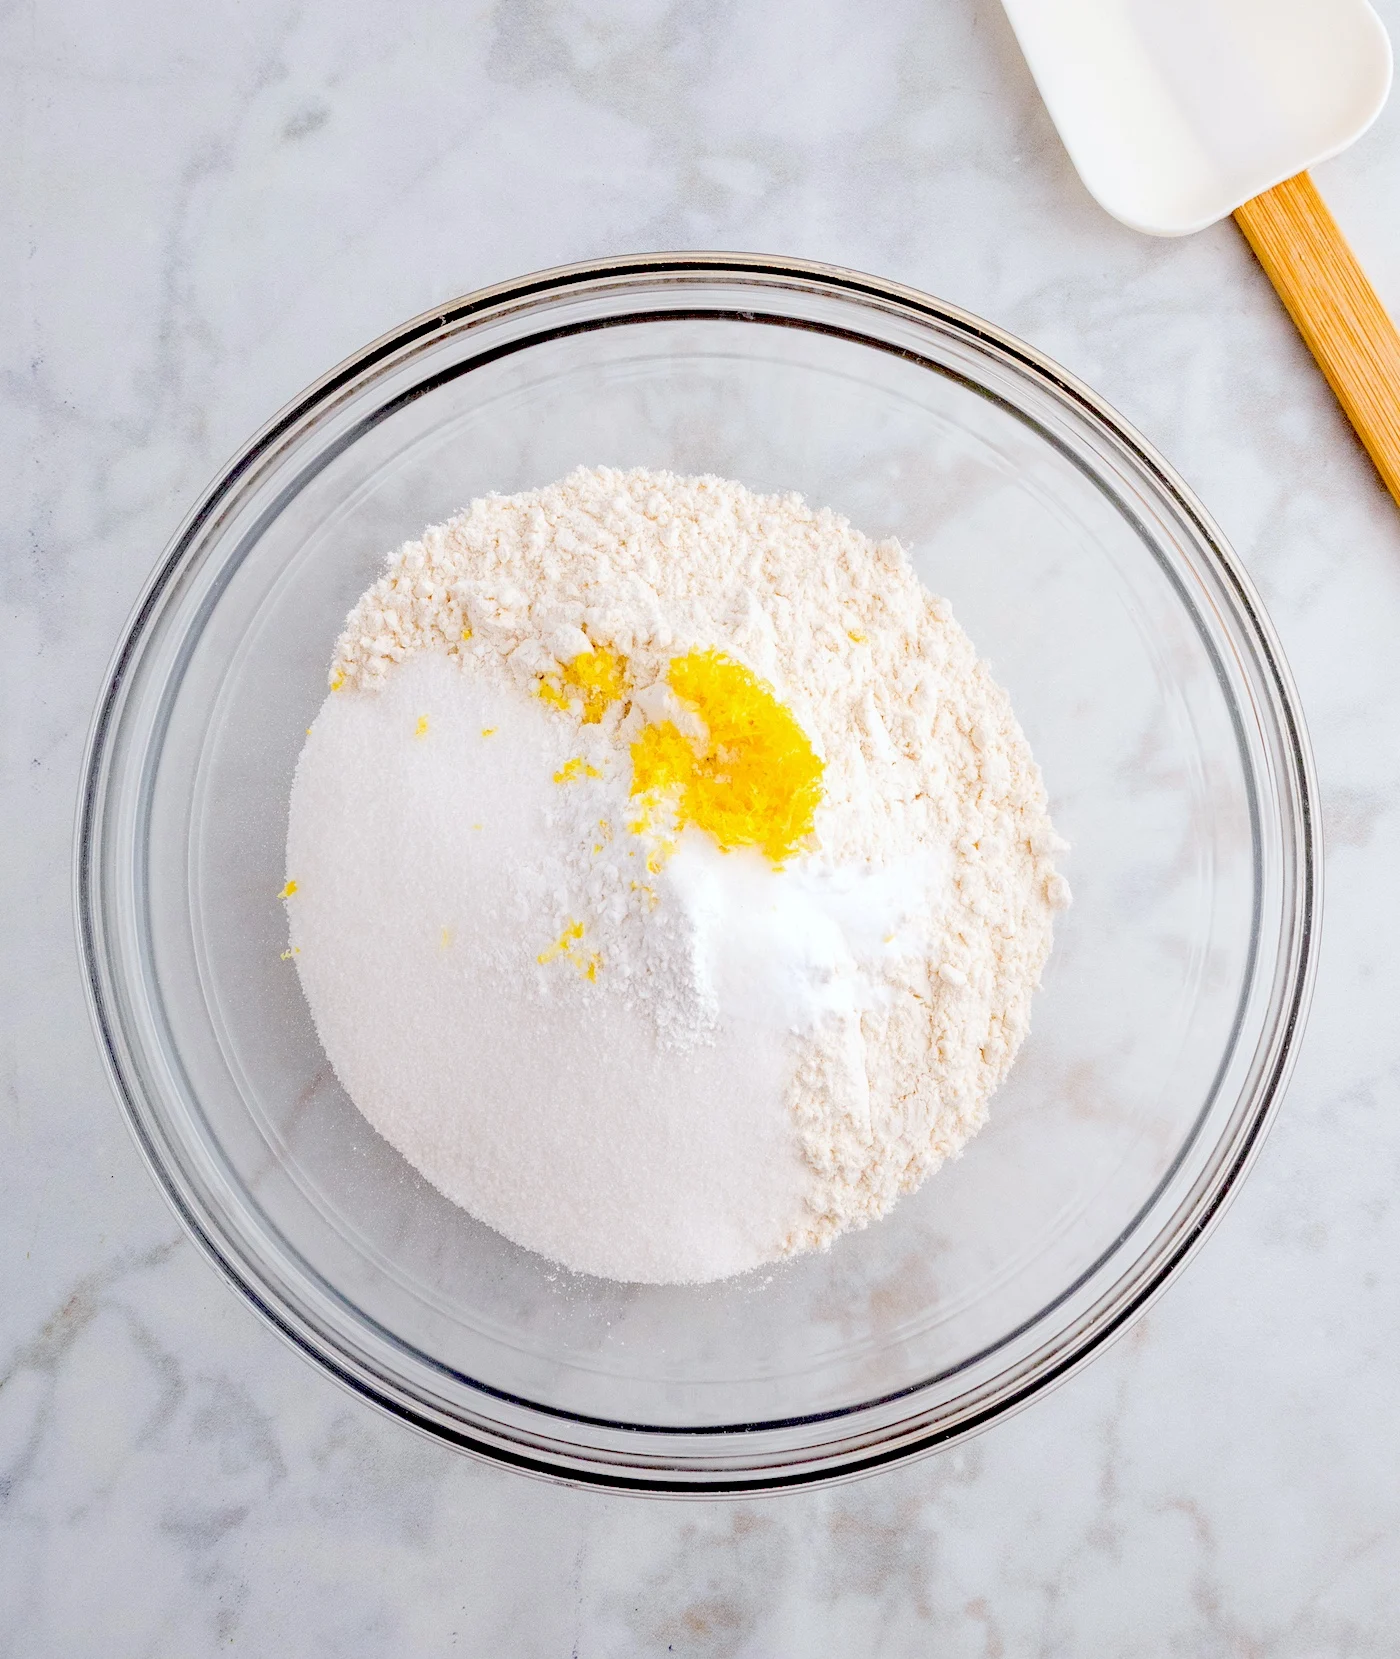 Combine the flour, granulated sugar, baking powder, baking soda, salt, and lemon zest in a bowl